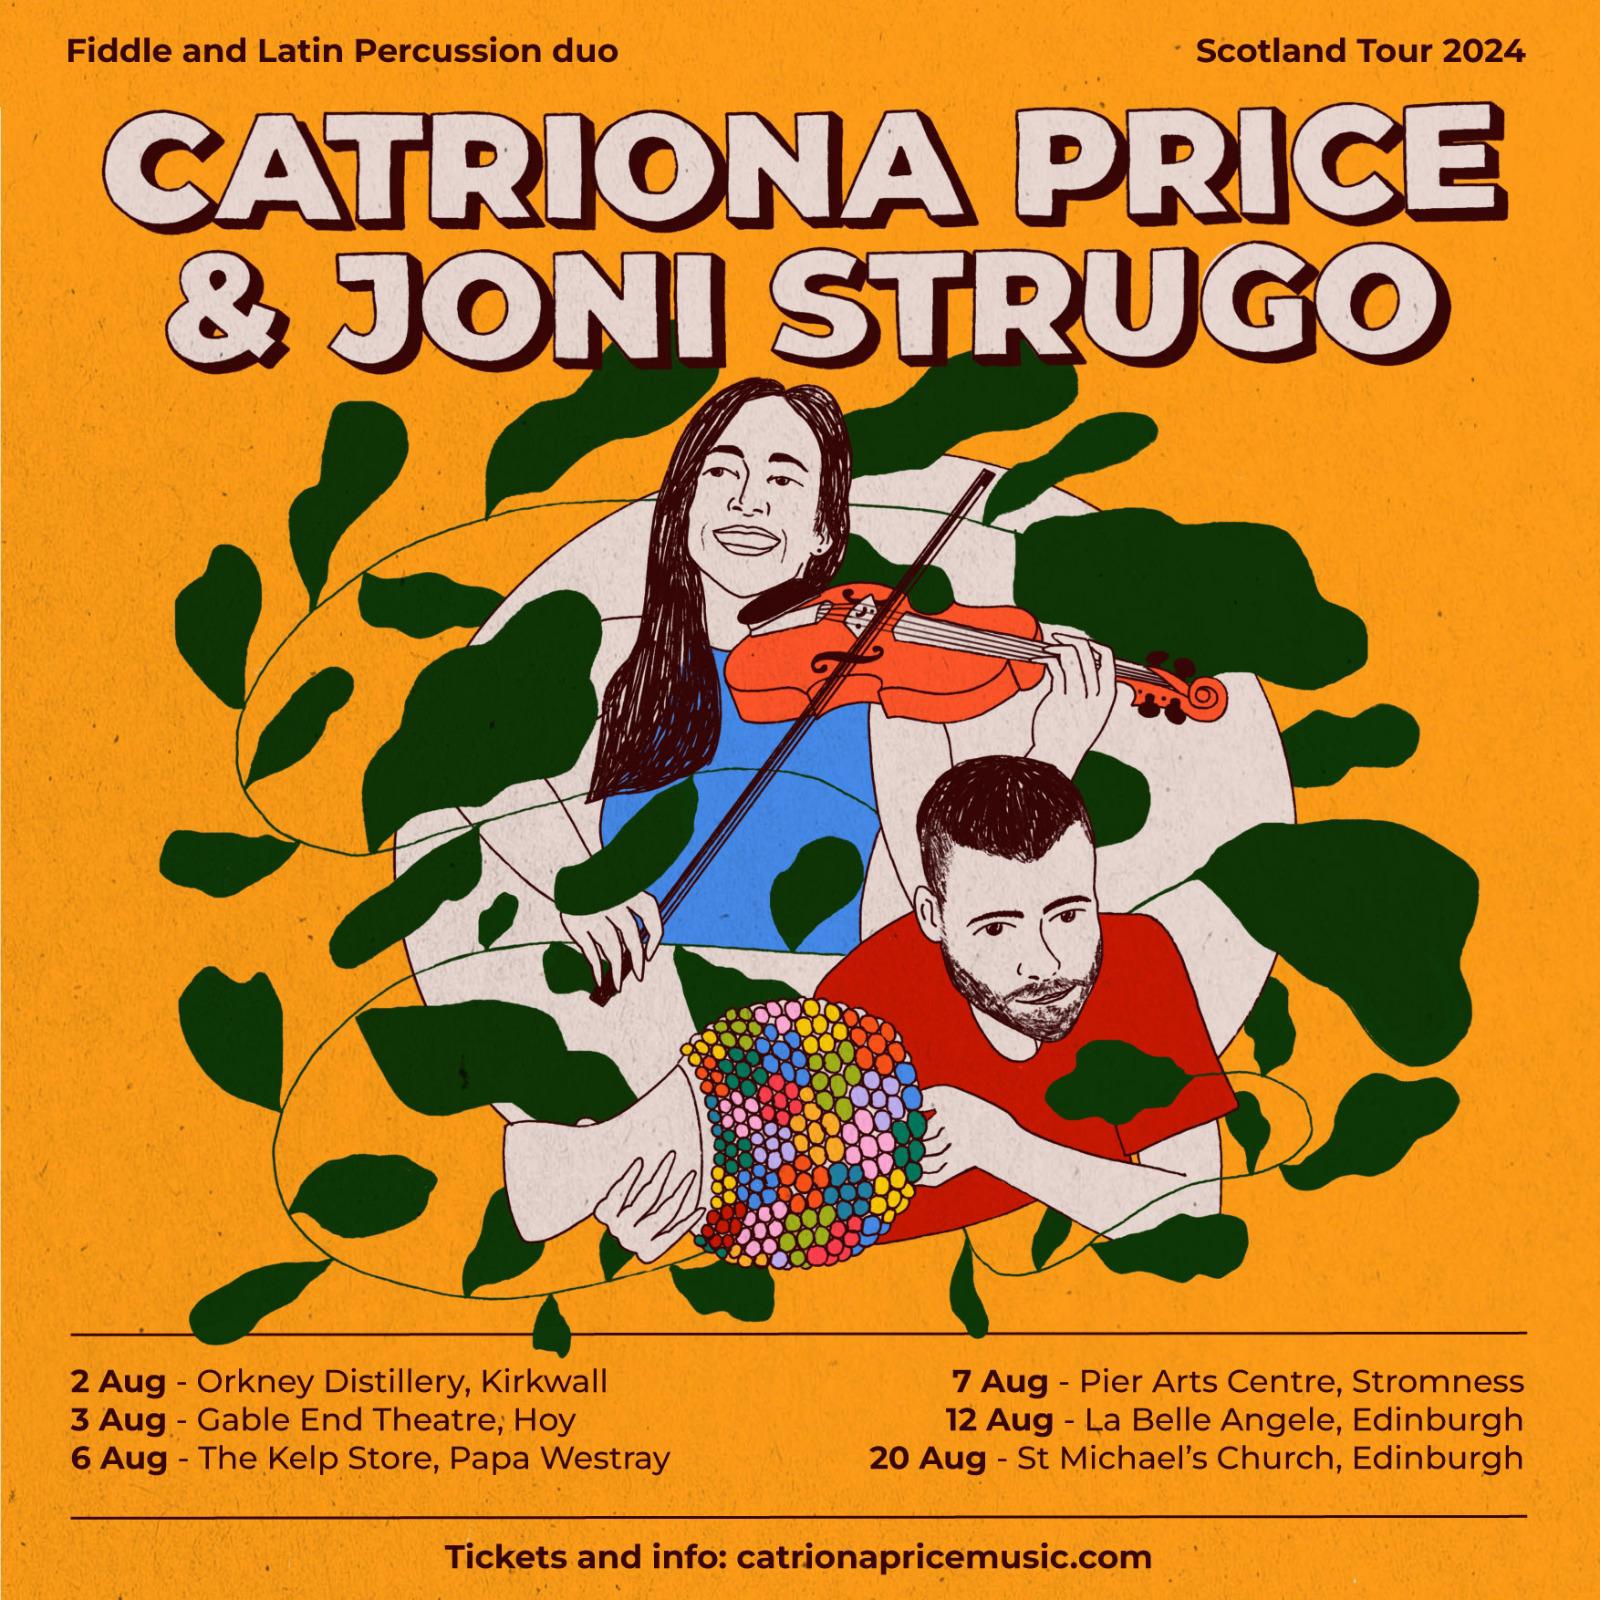 CATRIONA PRICE AND JONI STRUGO - Tickets: Pier Arts Centre, Stromness 07/08